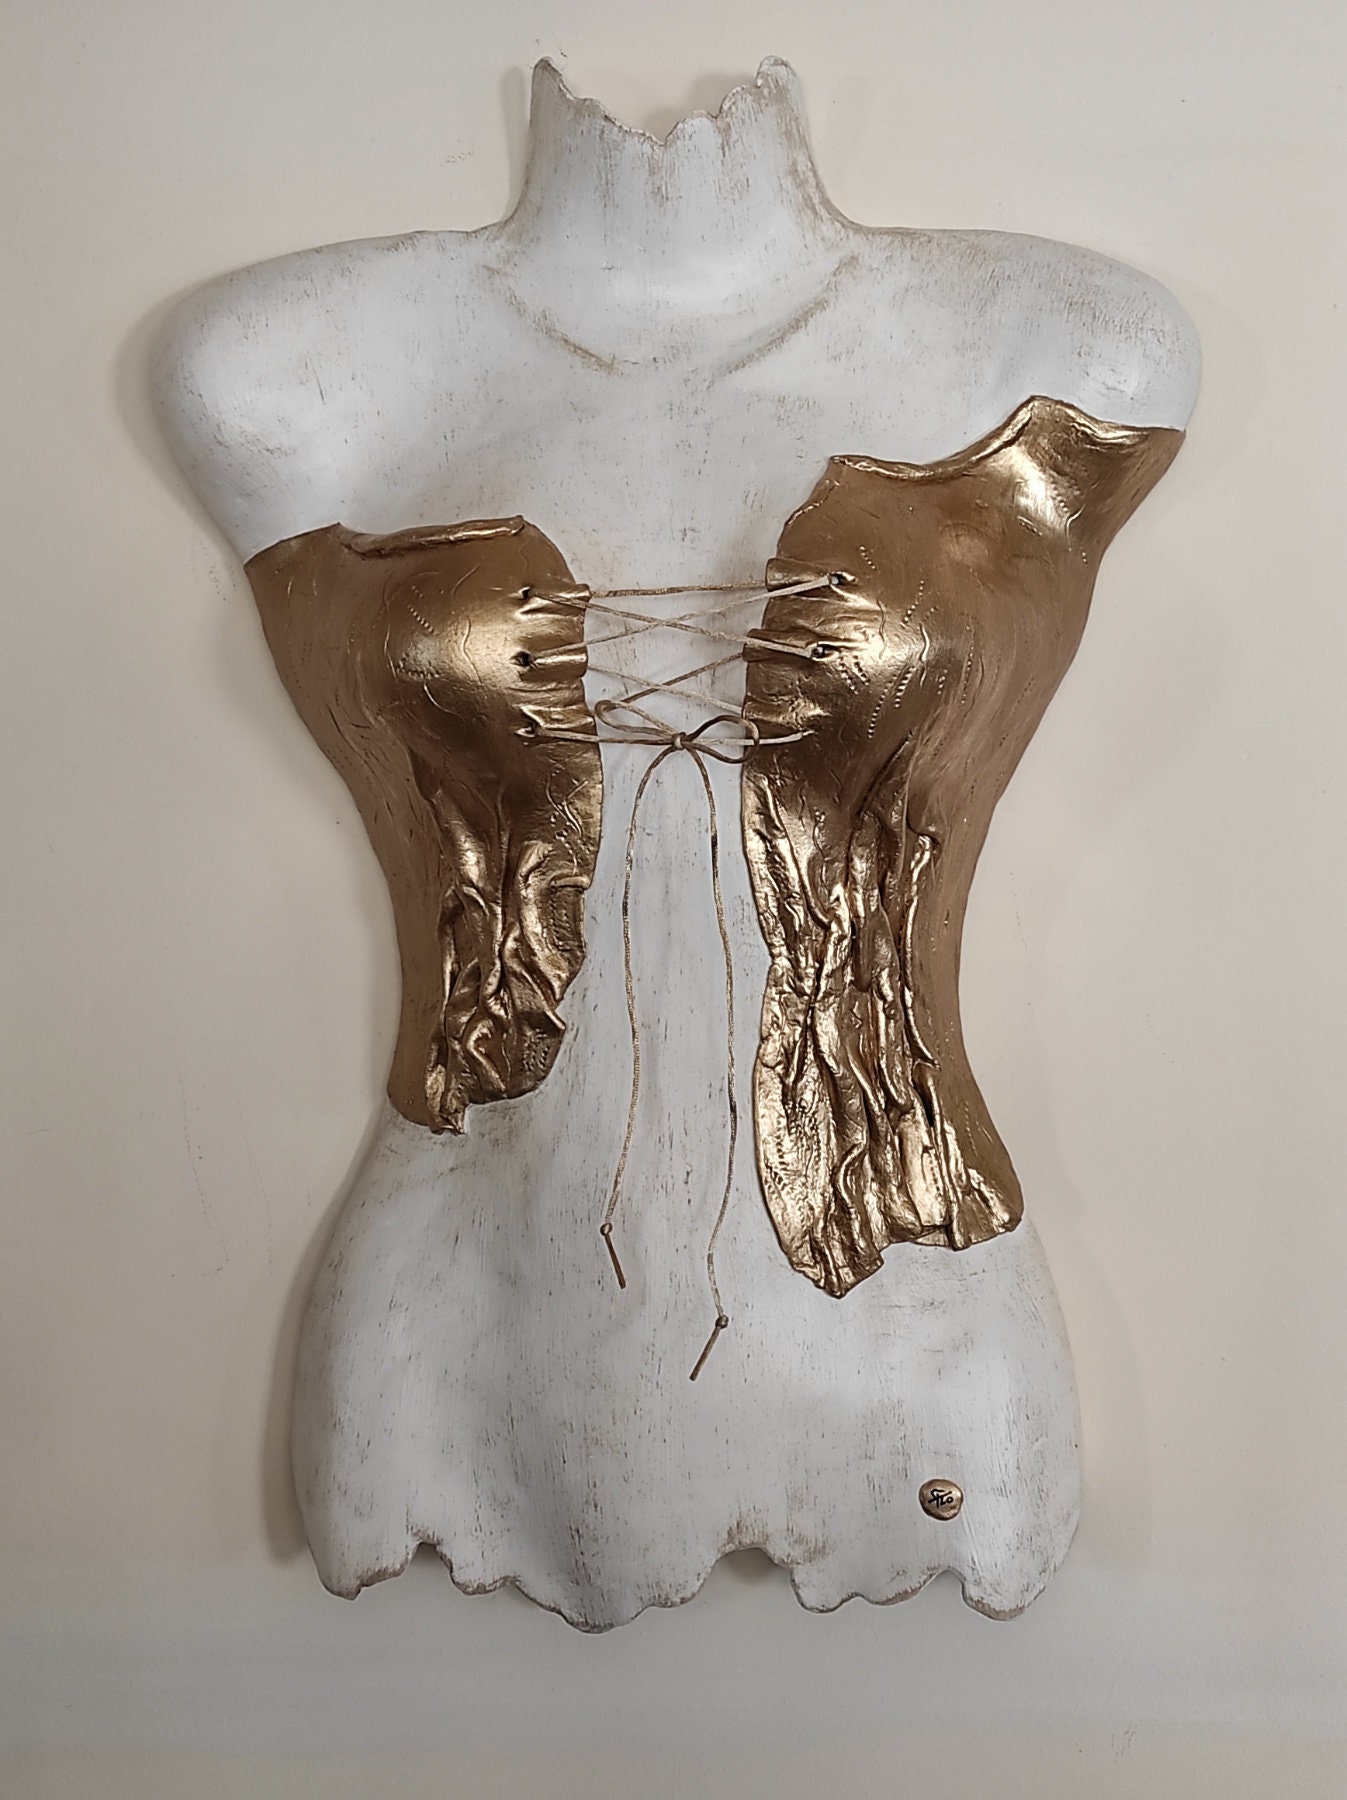 Life Size Μannequin Torso Sculpture L ceramic Corset female Bust